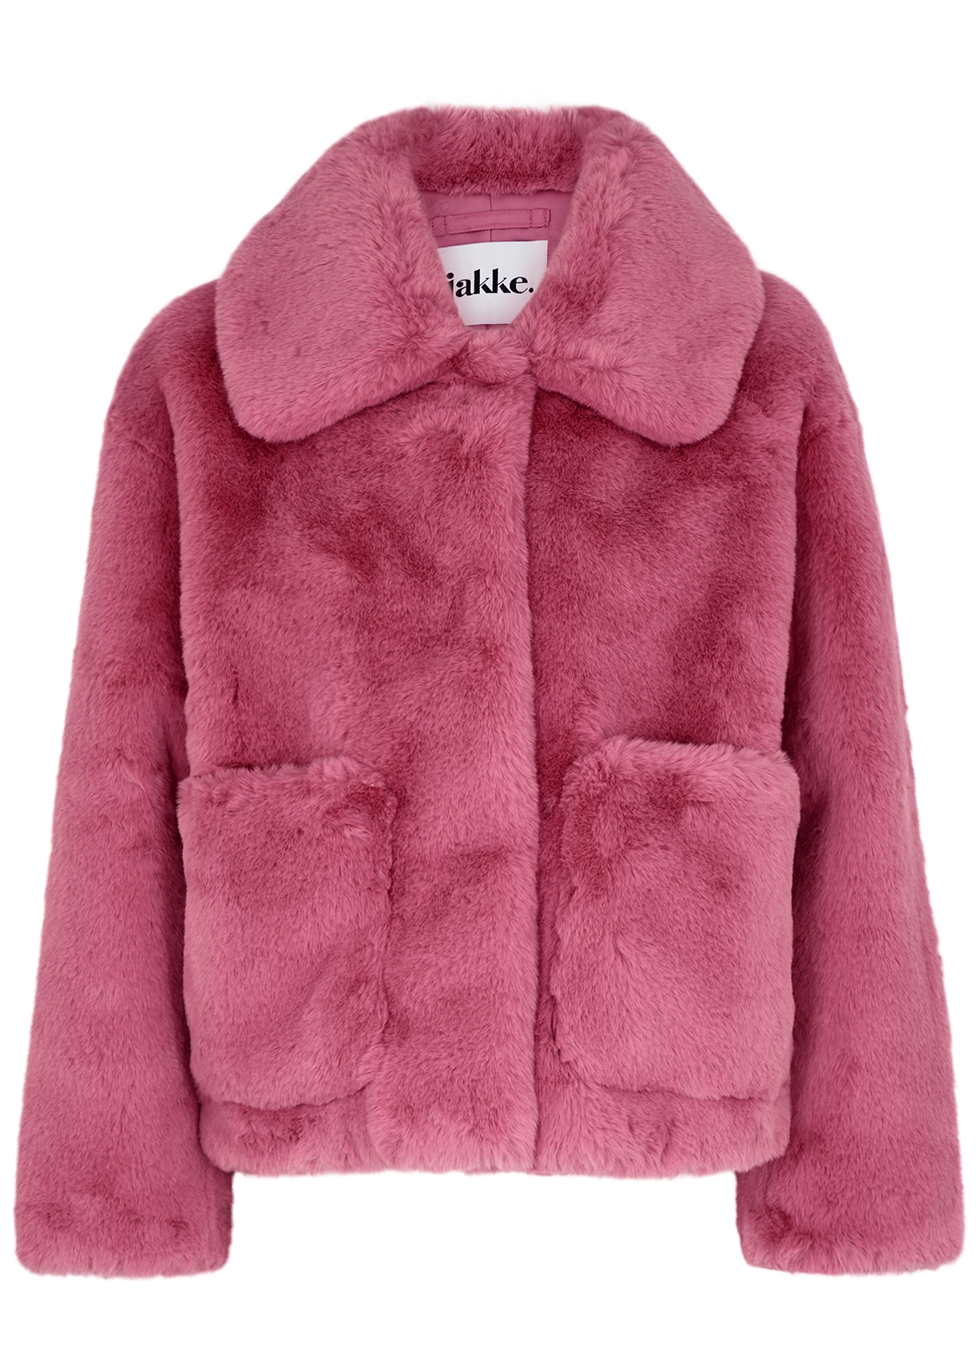 JAKKE Traci pink faux fur coat - Harvey Nichols